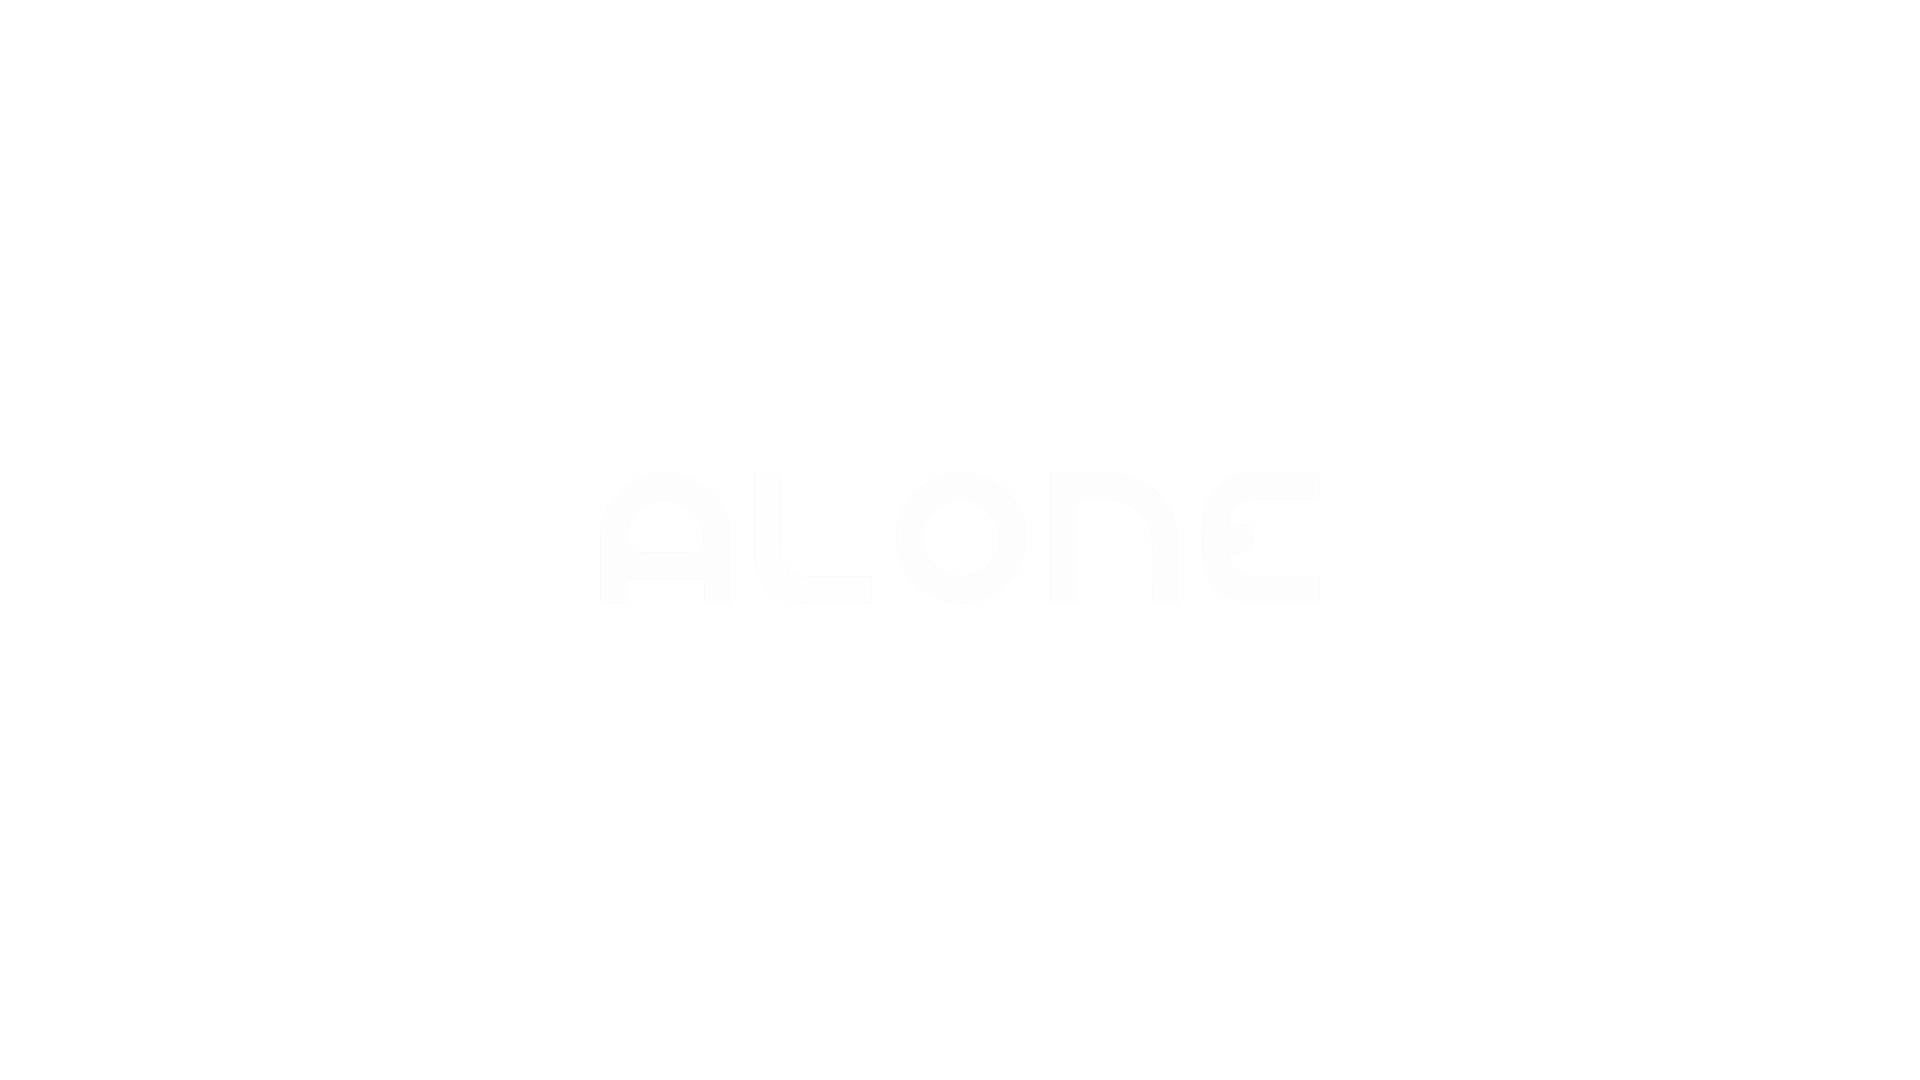 Alone logo